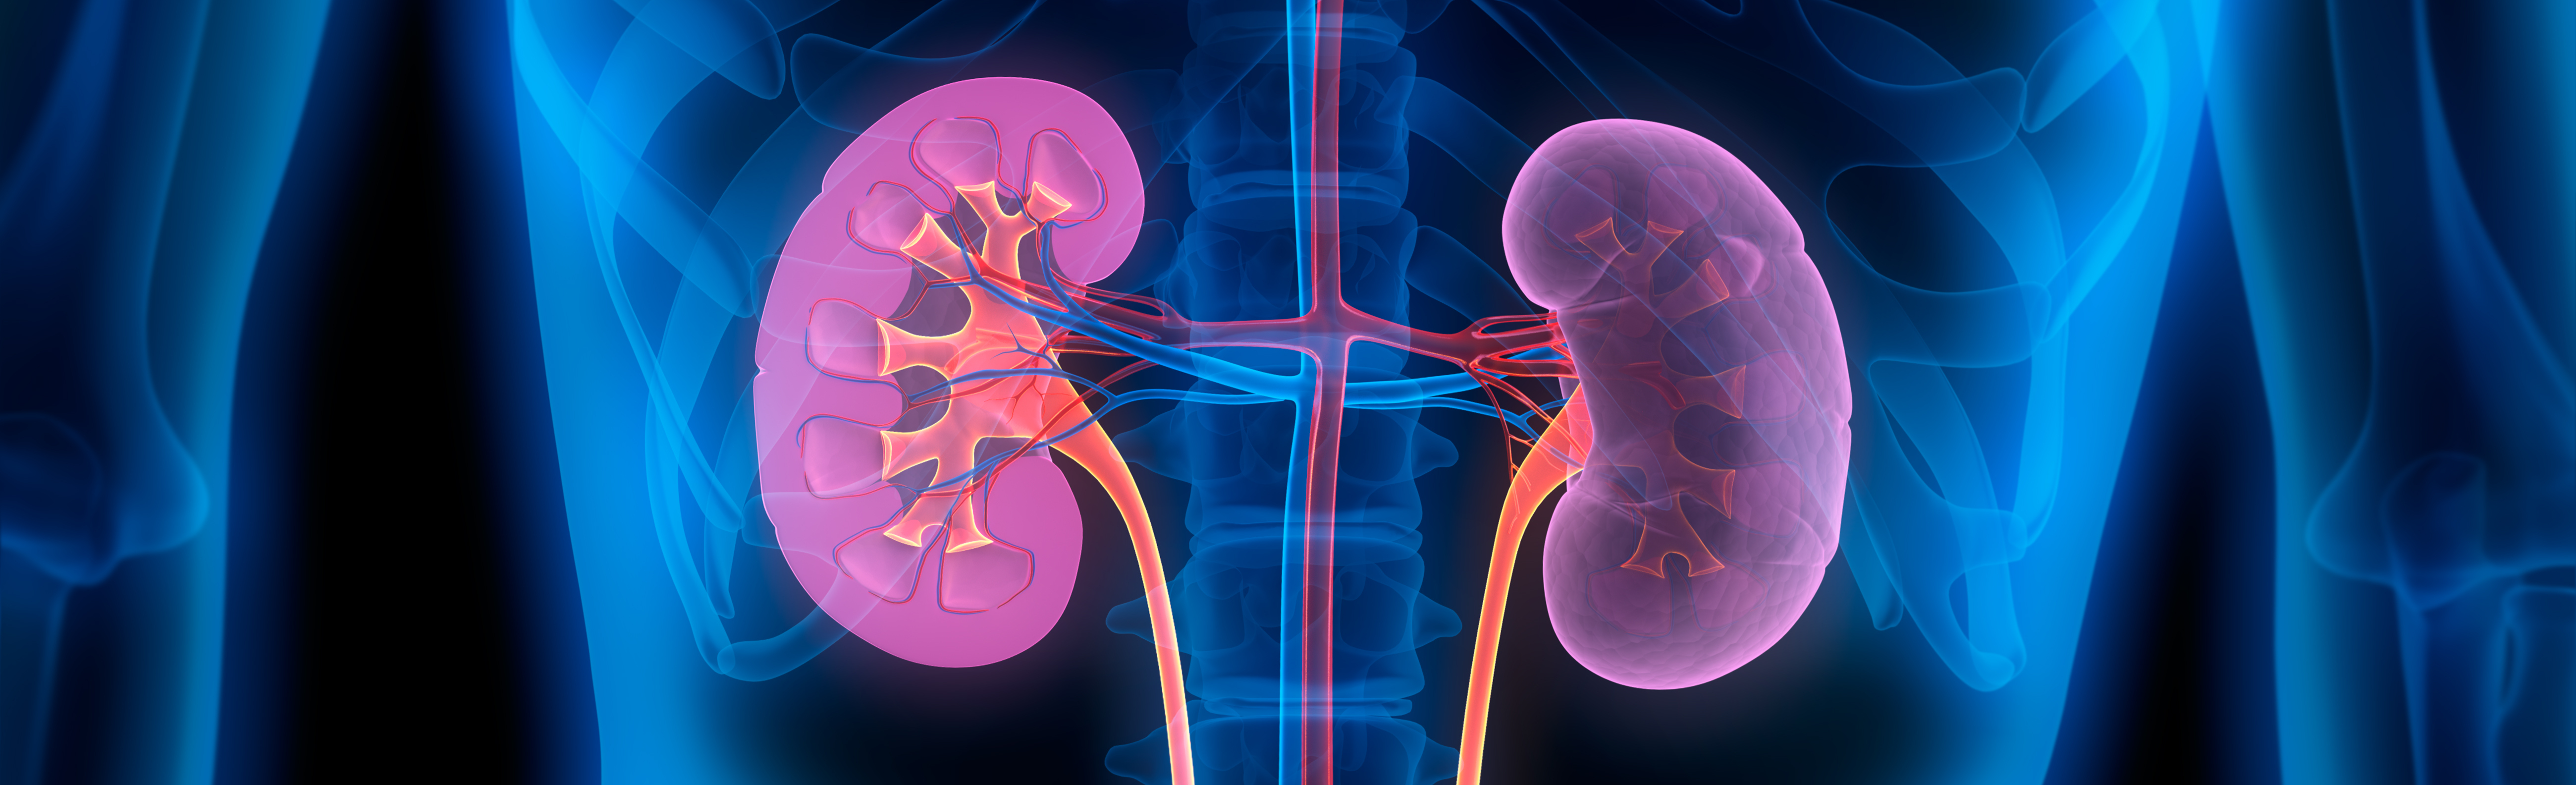 Illustration of internal structure of kidneys